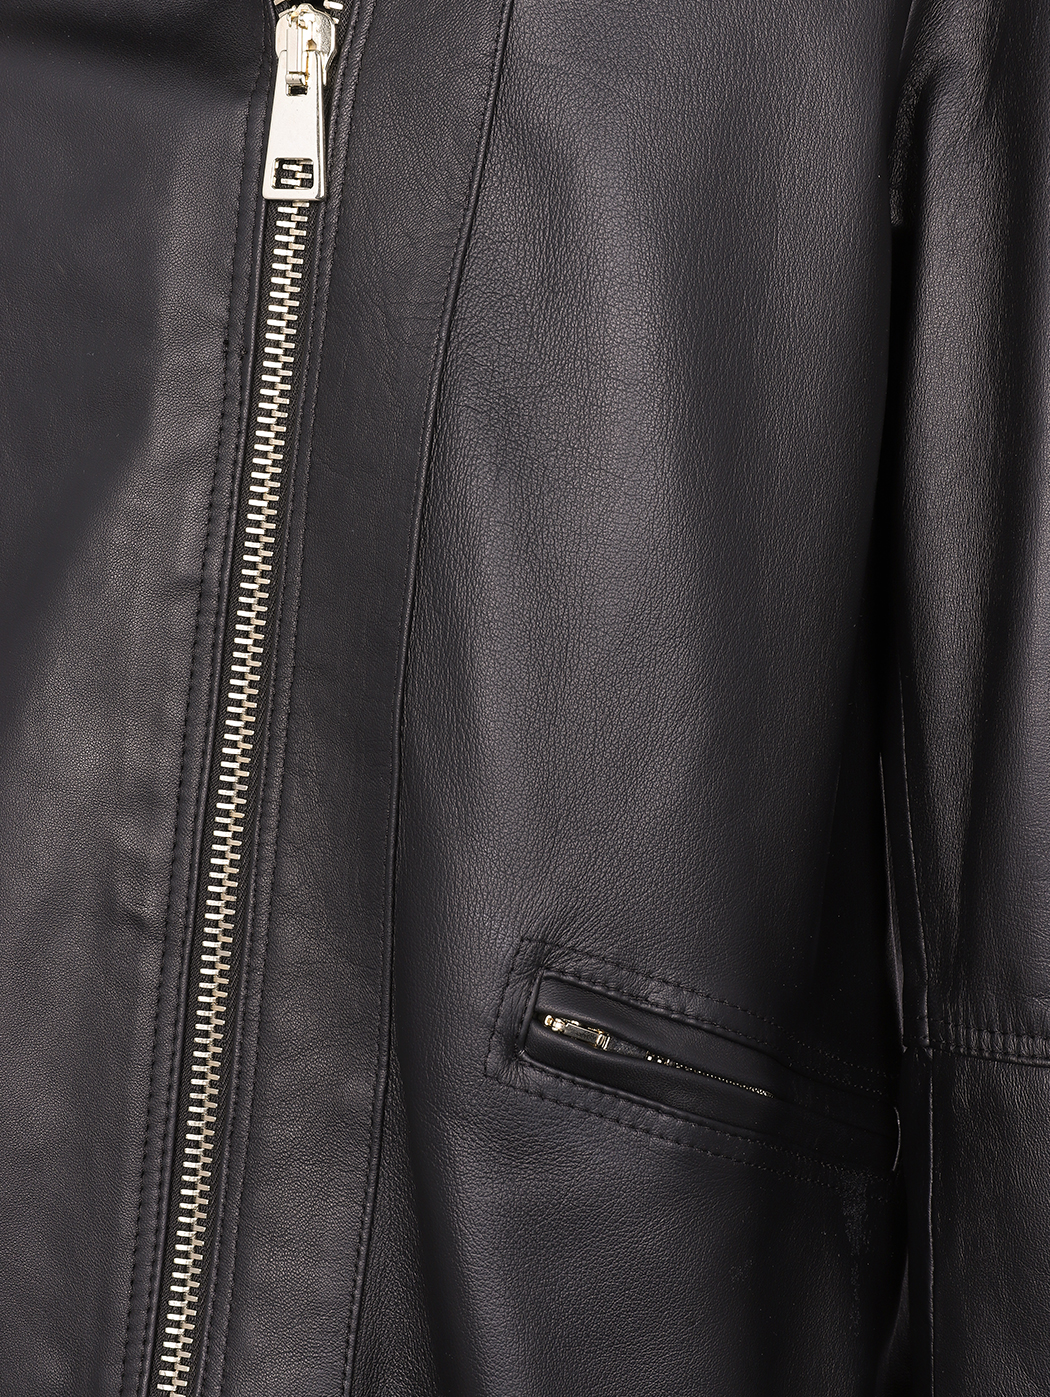 Women’s calibrated black leather jacket